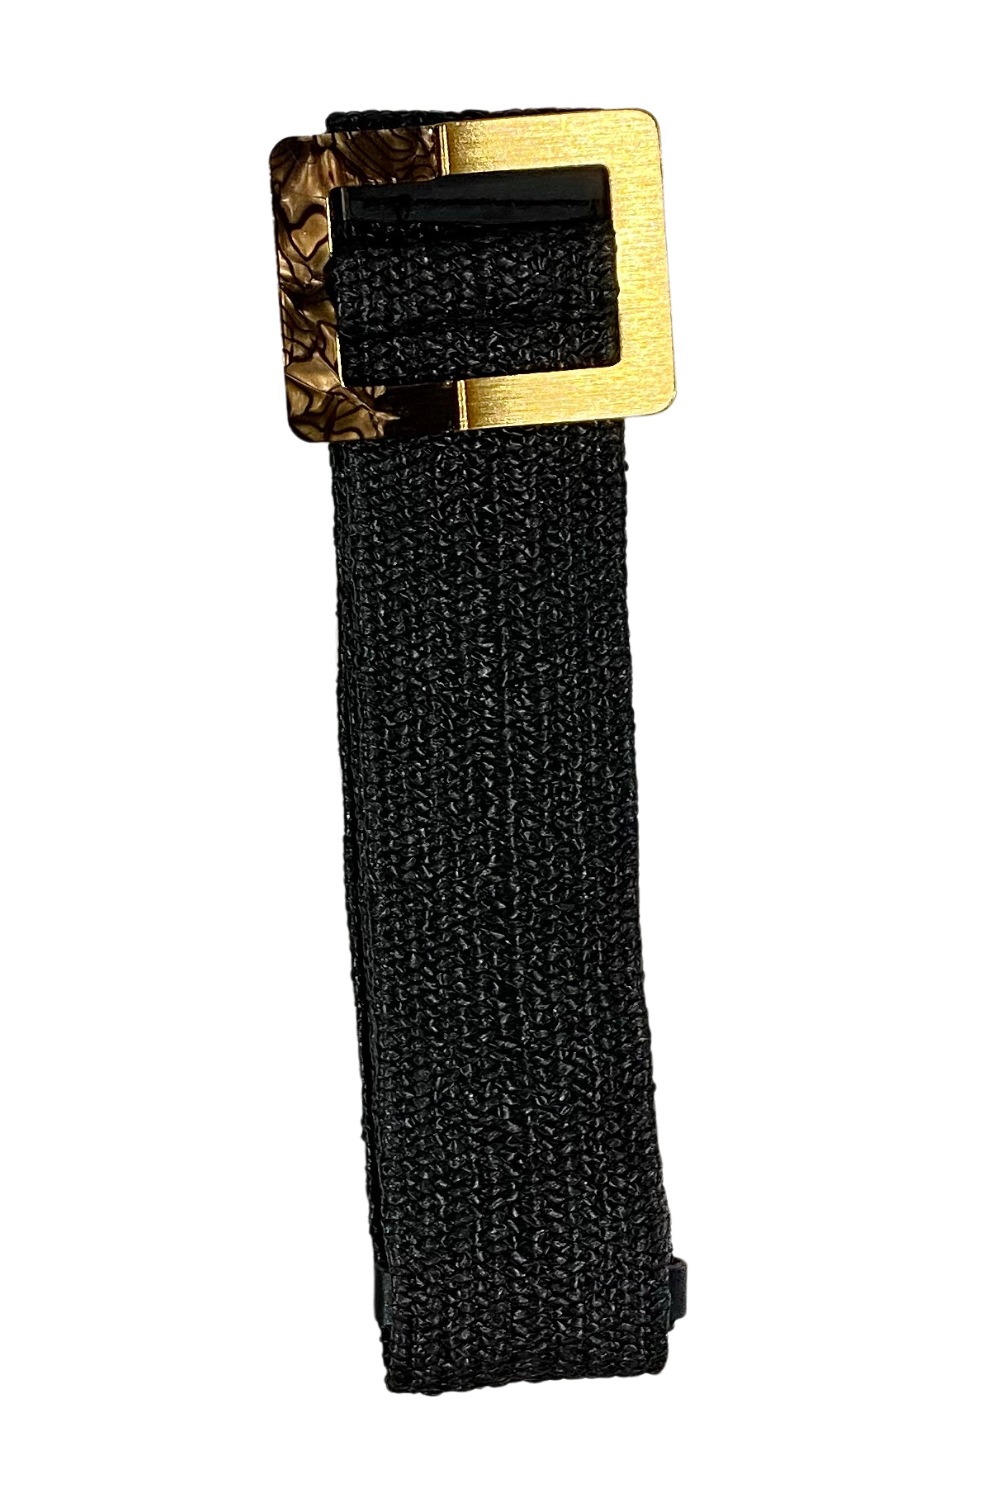 Sardinia Brass Belt Black